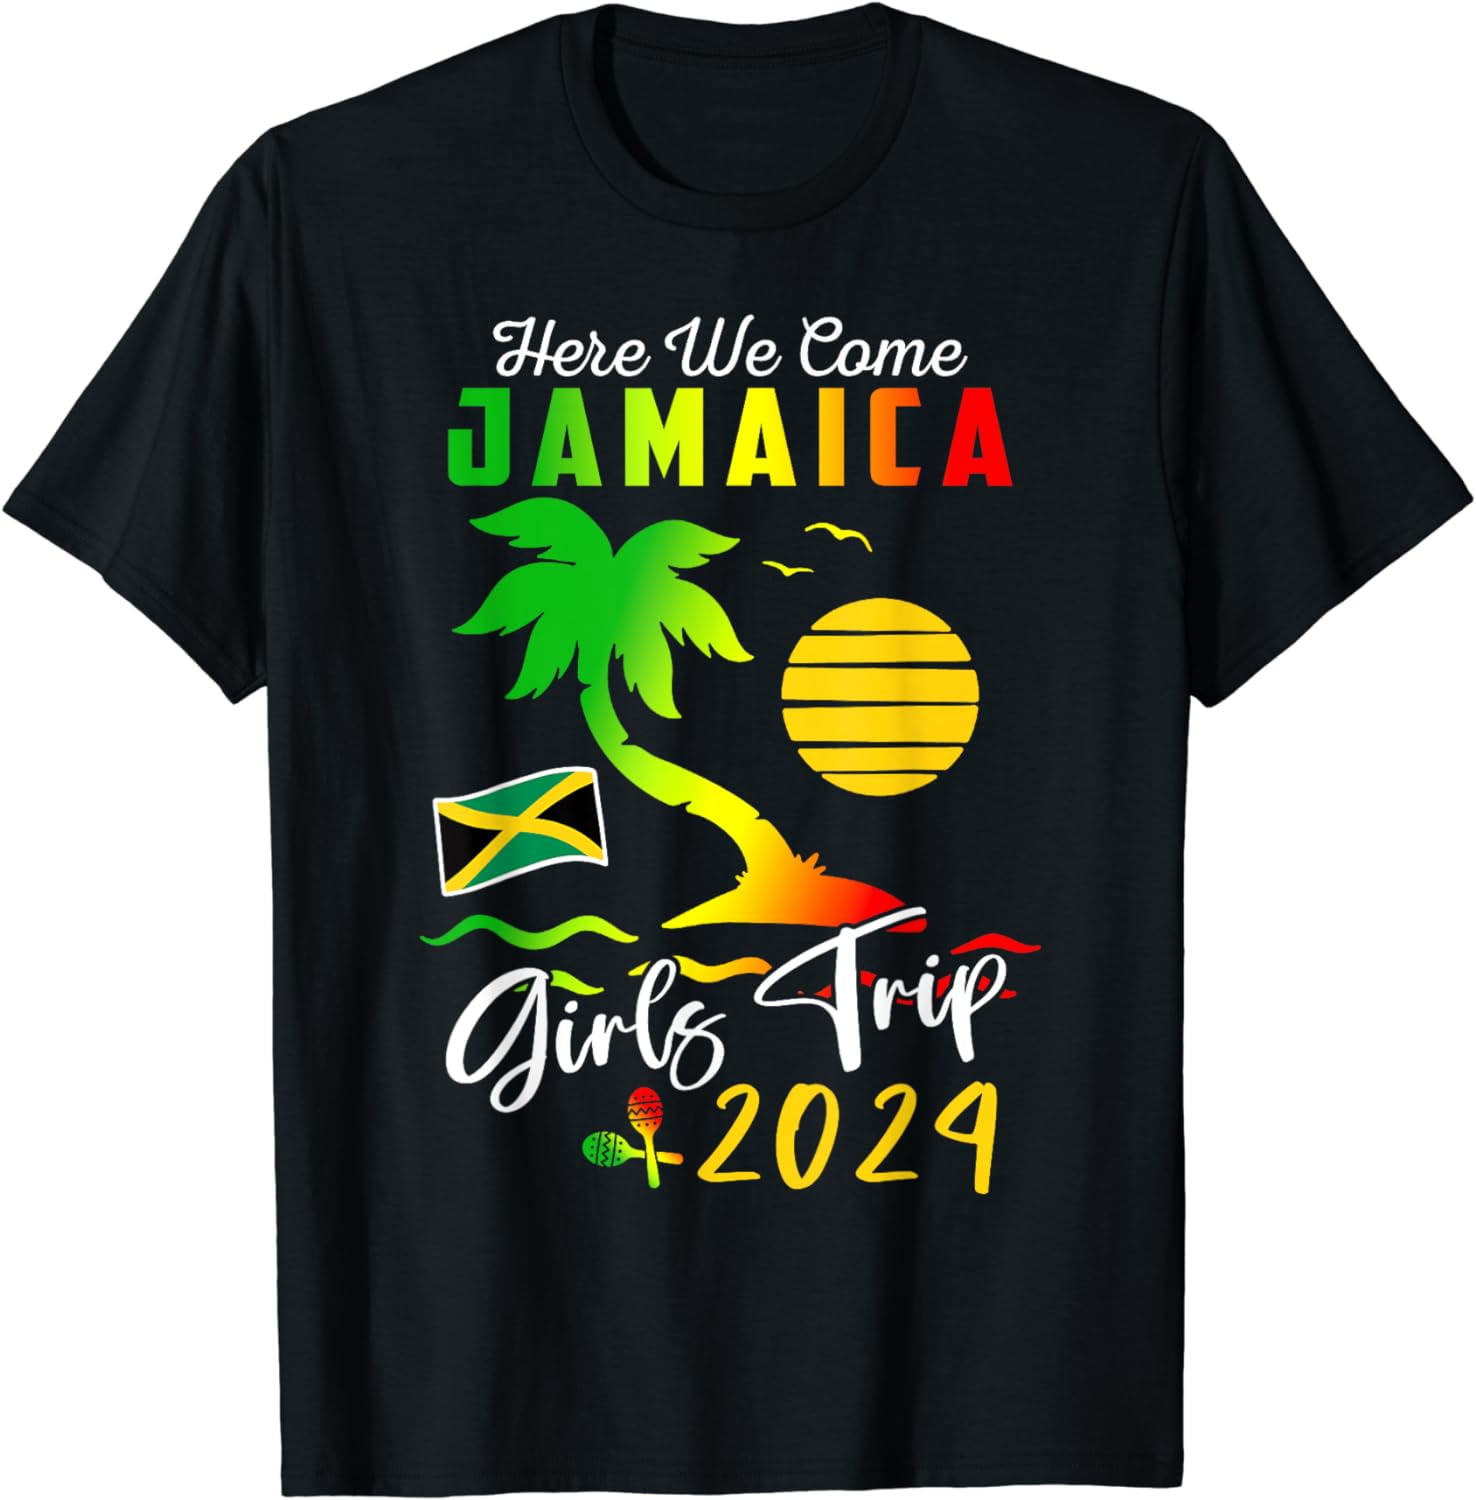 Here We Come Jamaica Girls Trip 2024 Vacation Trip T-Shirt - Walmart.com